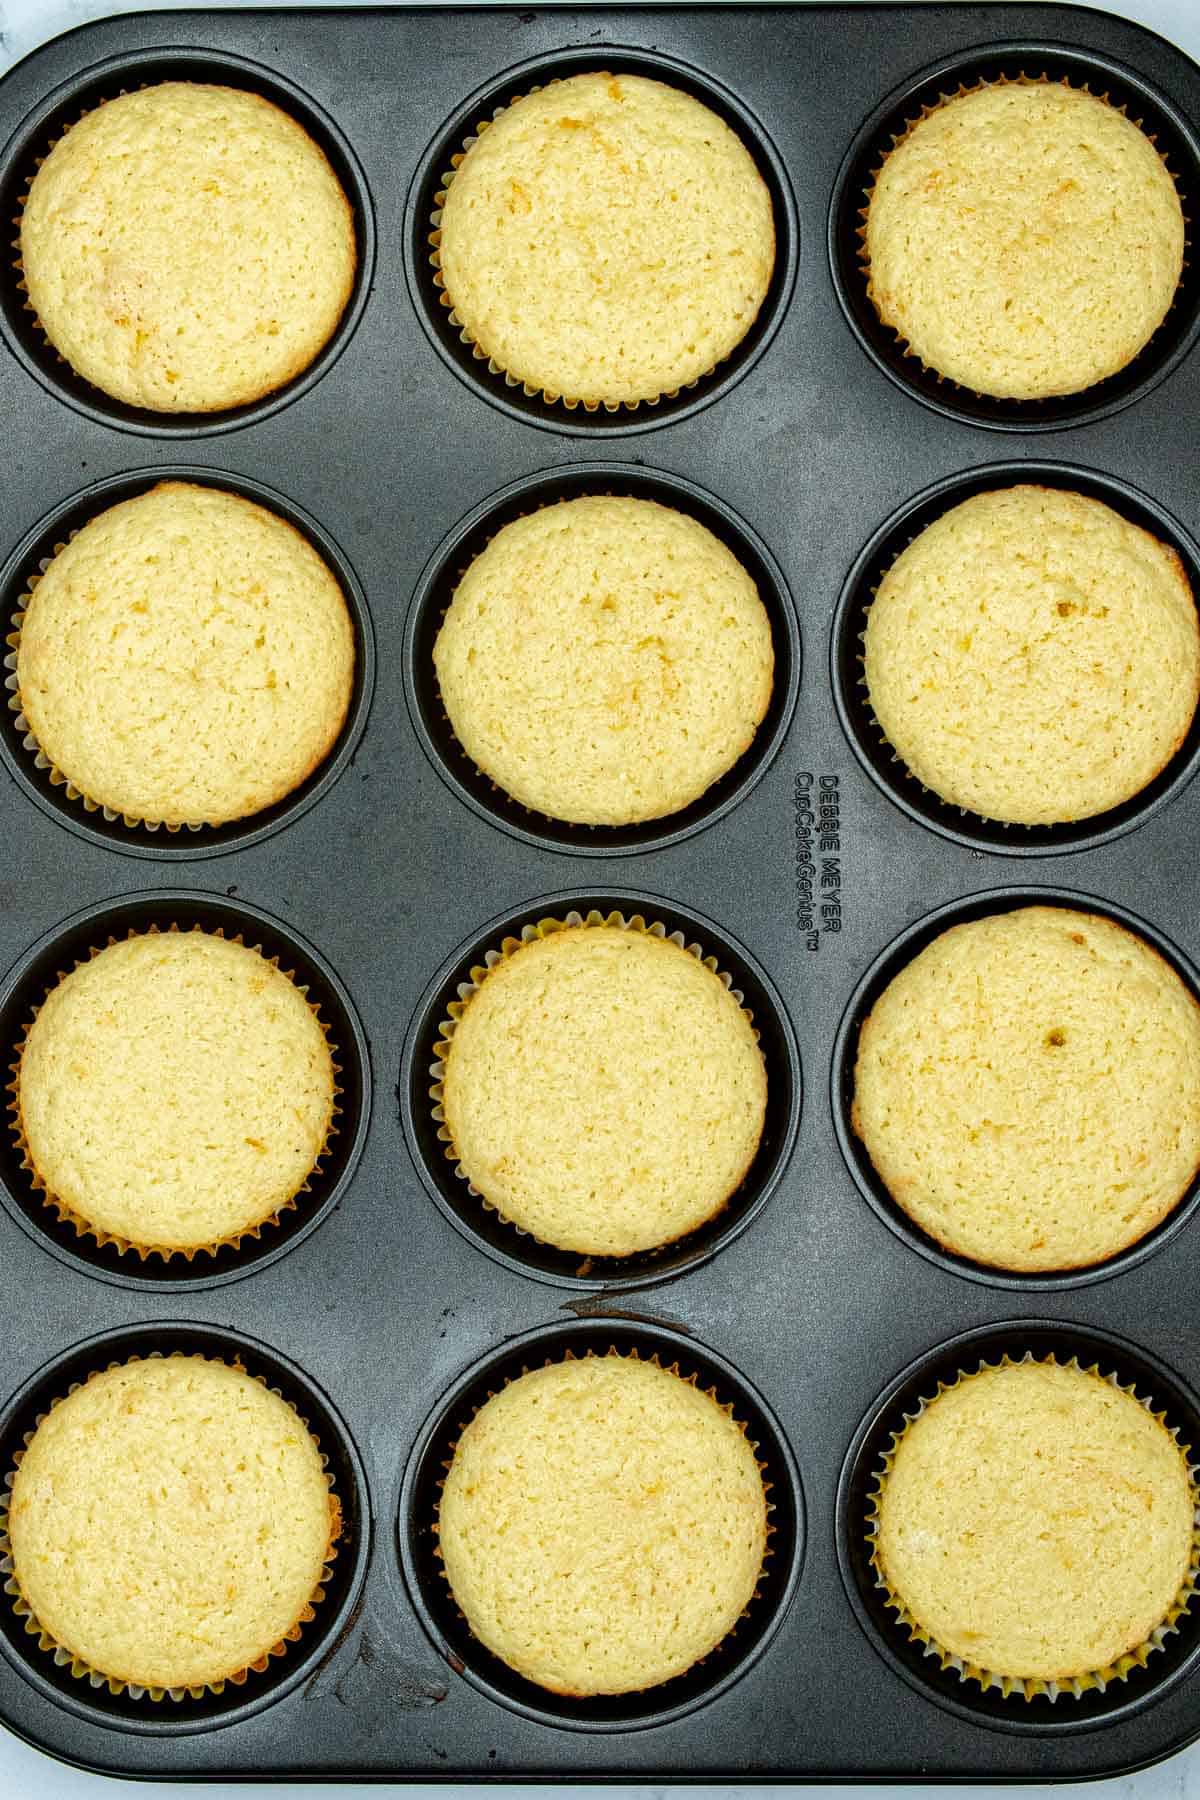 Baked Meyer lemon cupcakes in muffin tin.